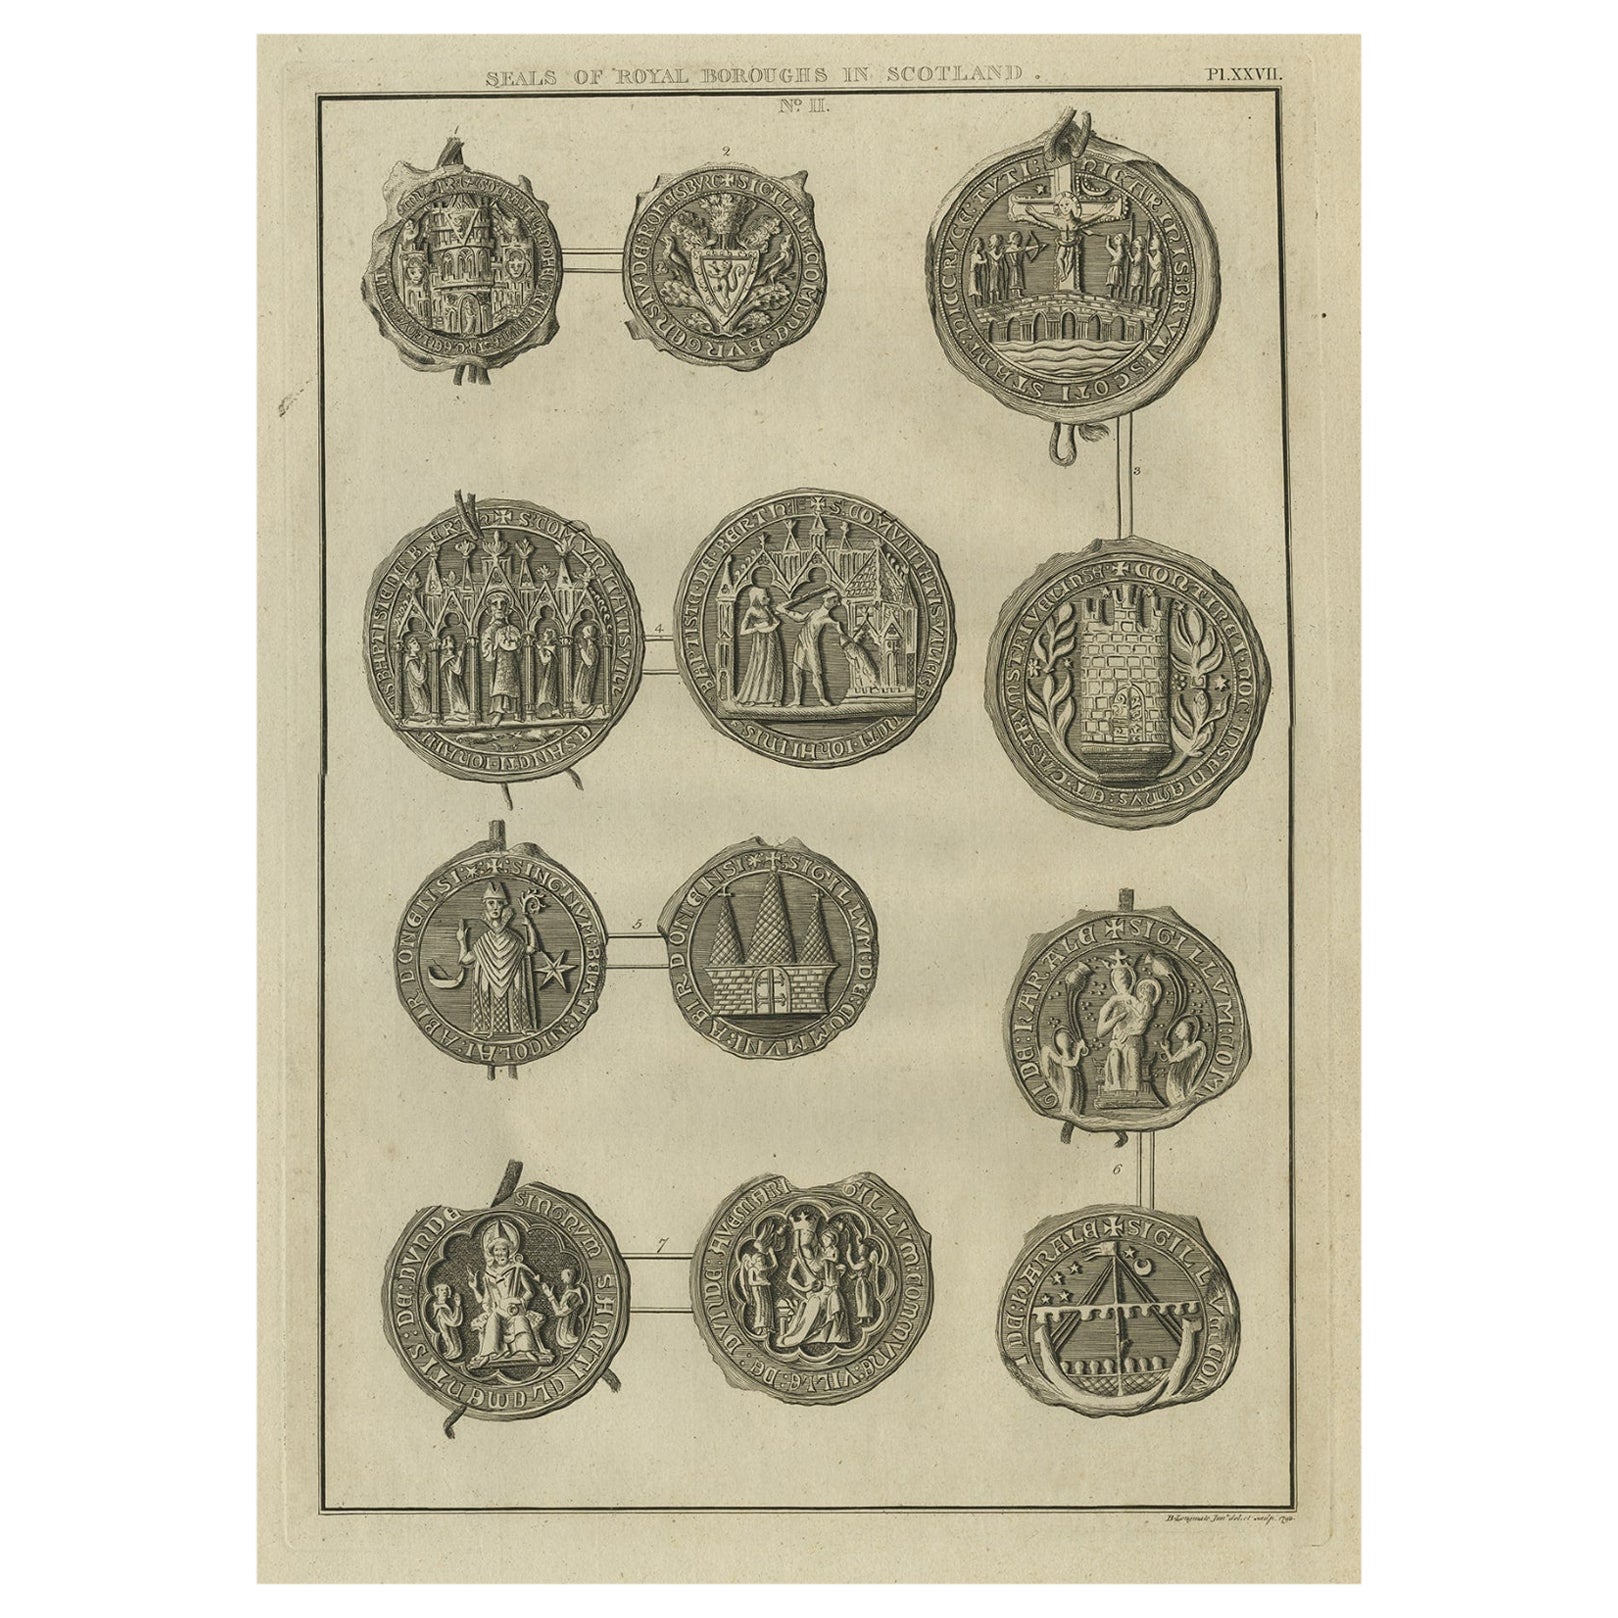 Rare Antique Print of Seals of Royal Boroughs in Scotland, 1792